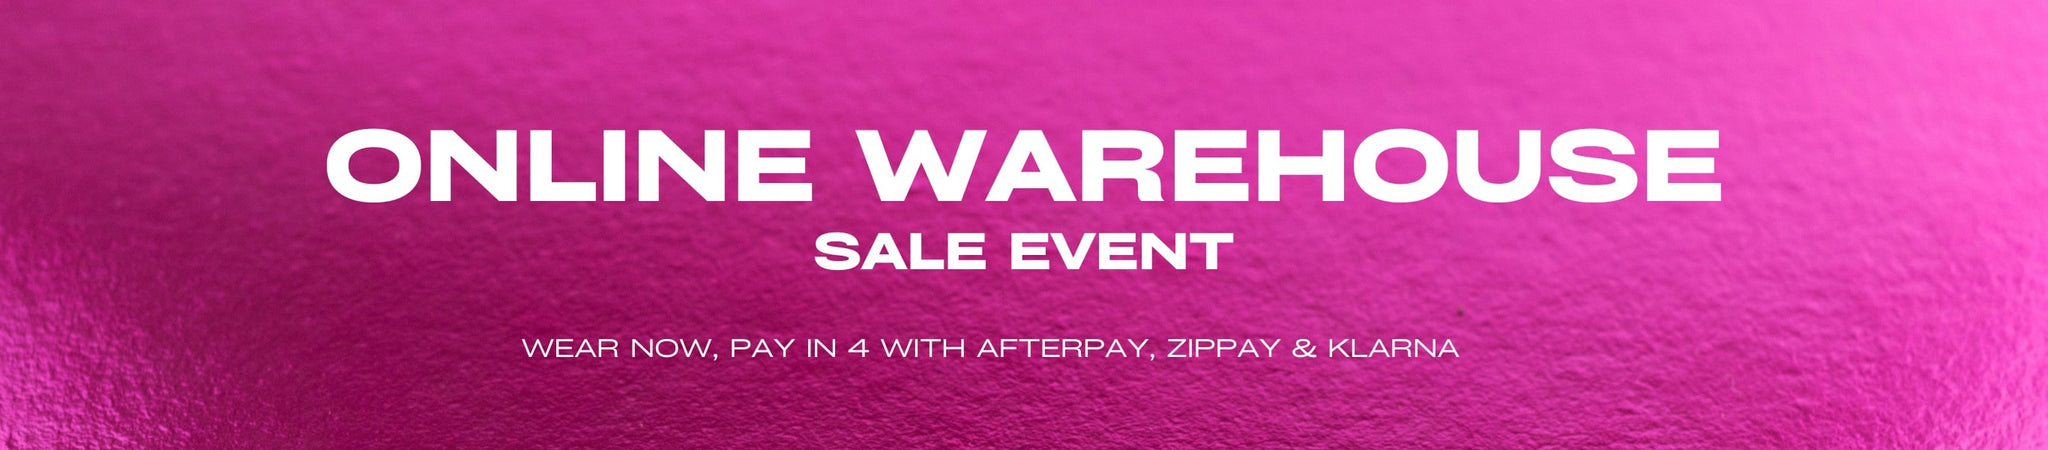 Online Warehouse Sale Event